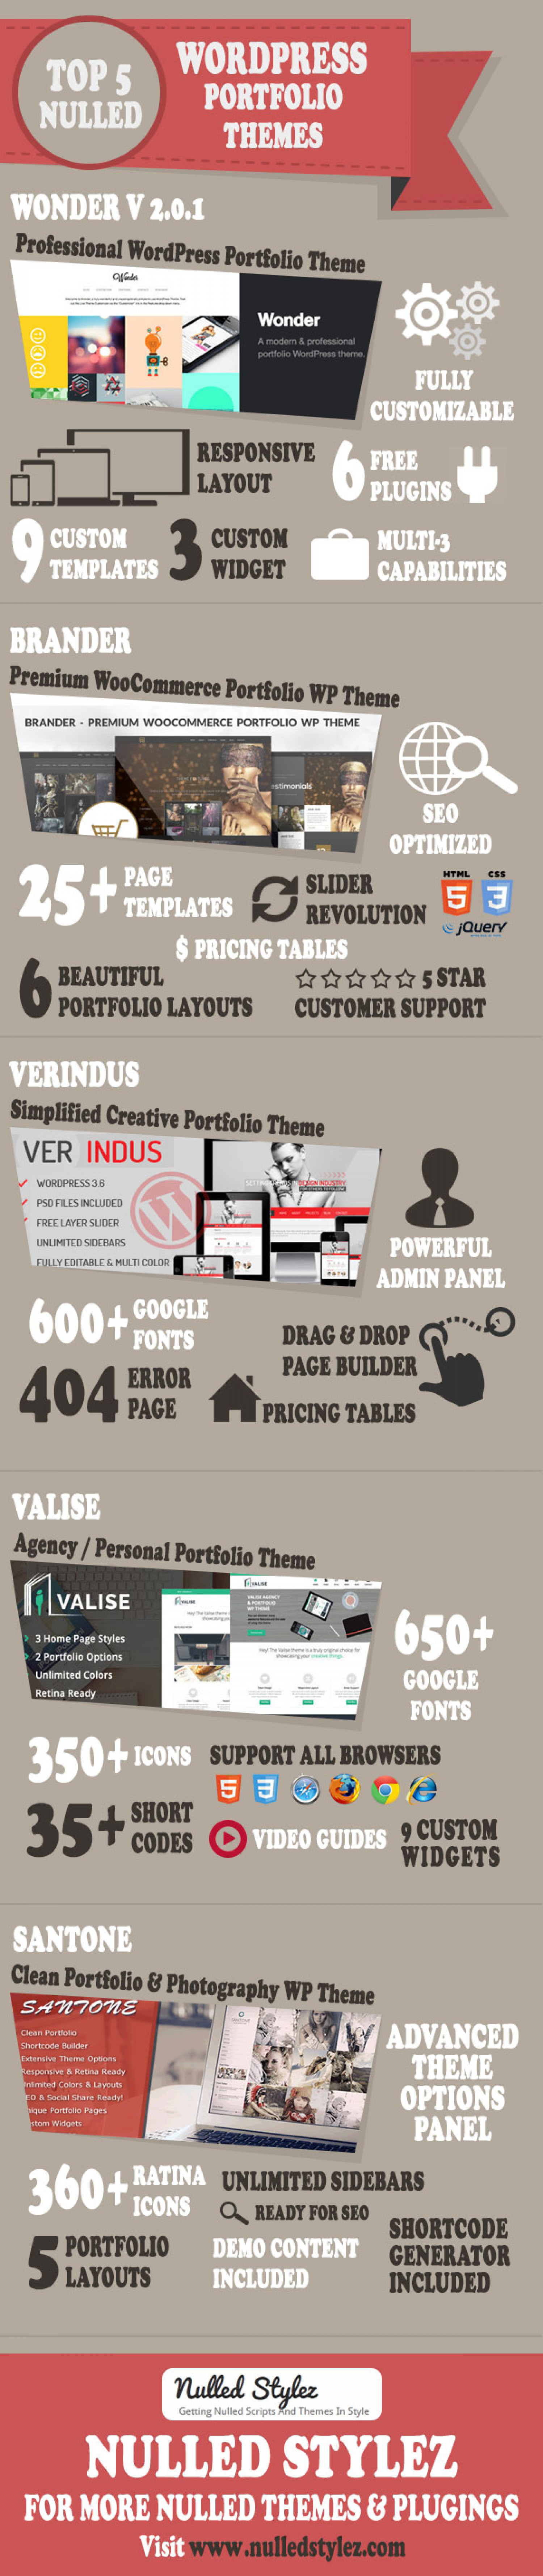 Best 5 WordPress Portfolio Themes Infographic